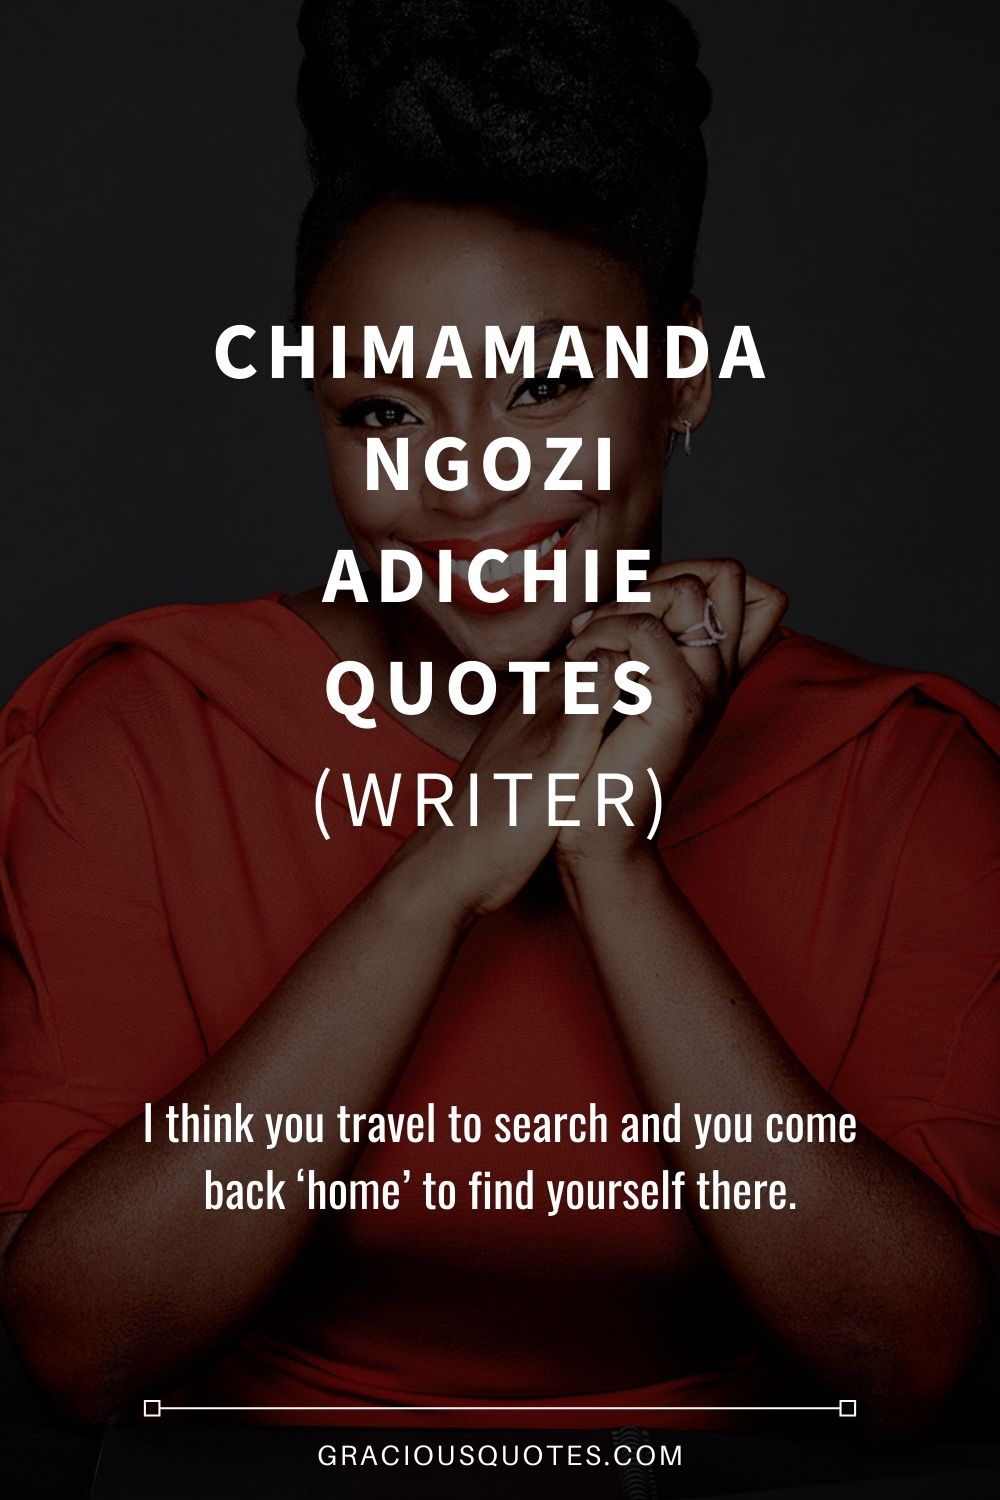 Chimamanda Ngozi Adichie Quotes (WRITER) - Gracious Quotes